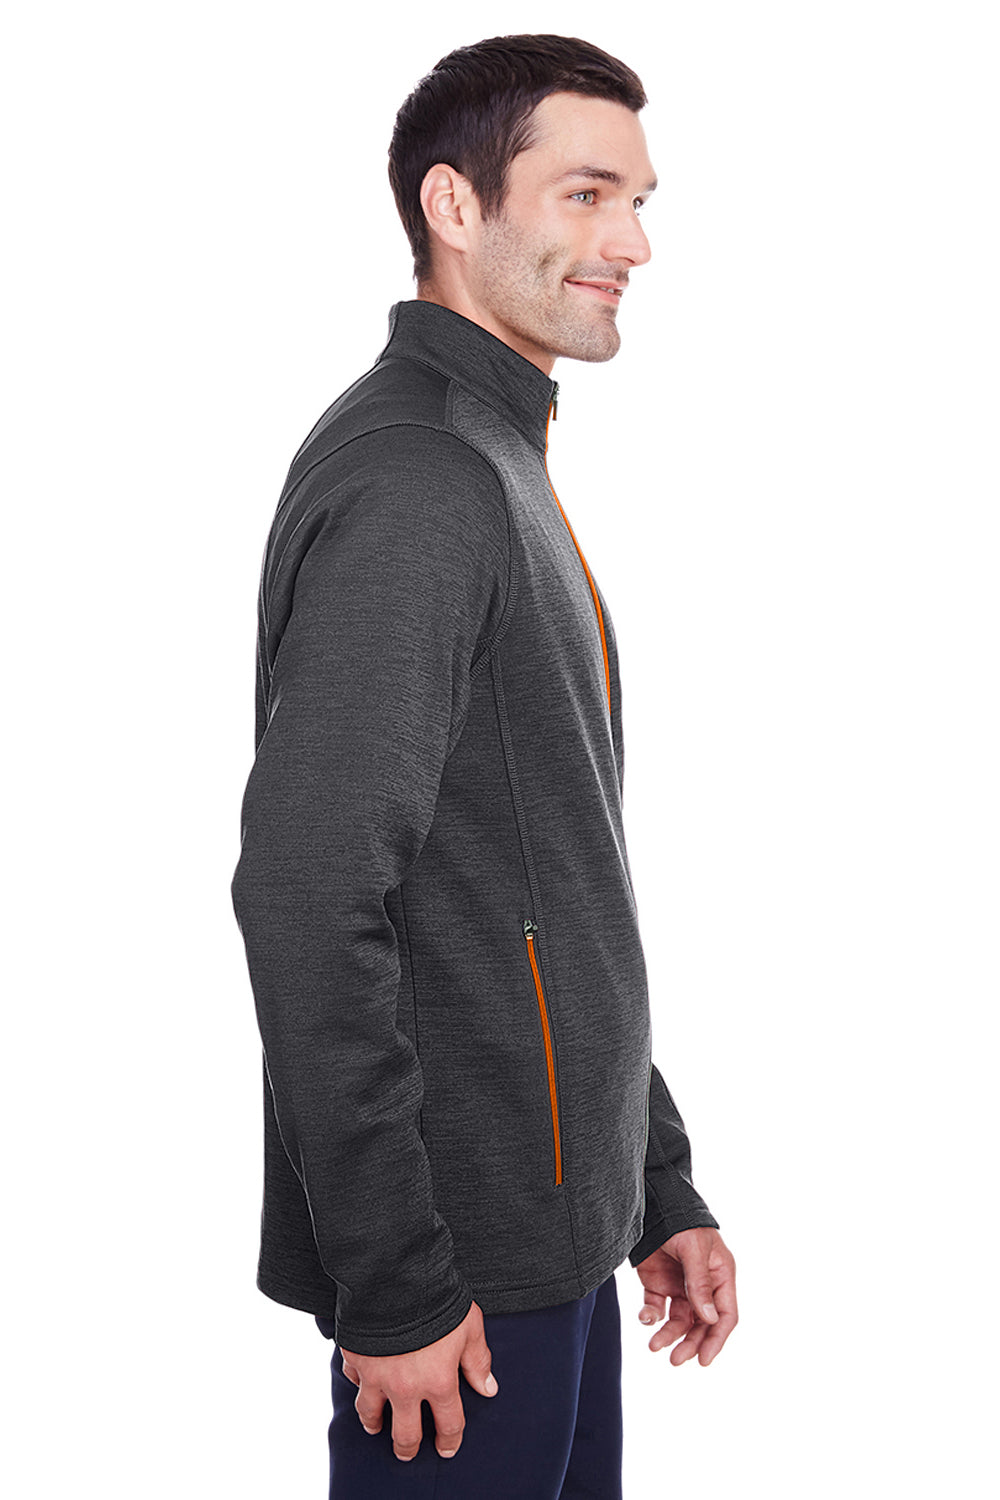 North End NE712 Mens Flux 2.0 Fleece Water Resistant Full Zip Jacket Black/Orange Side